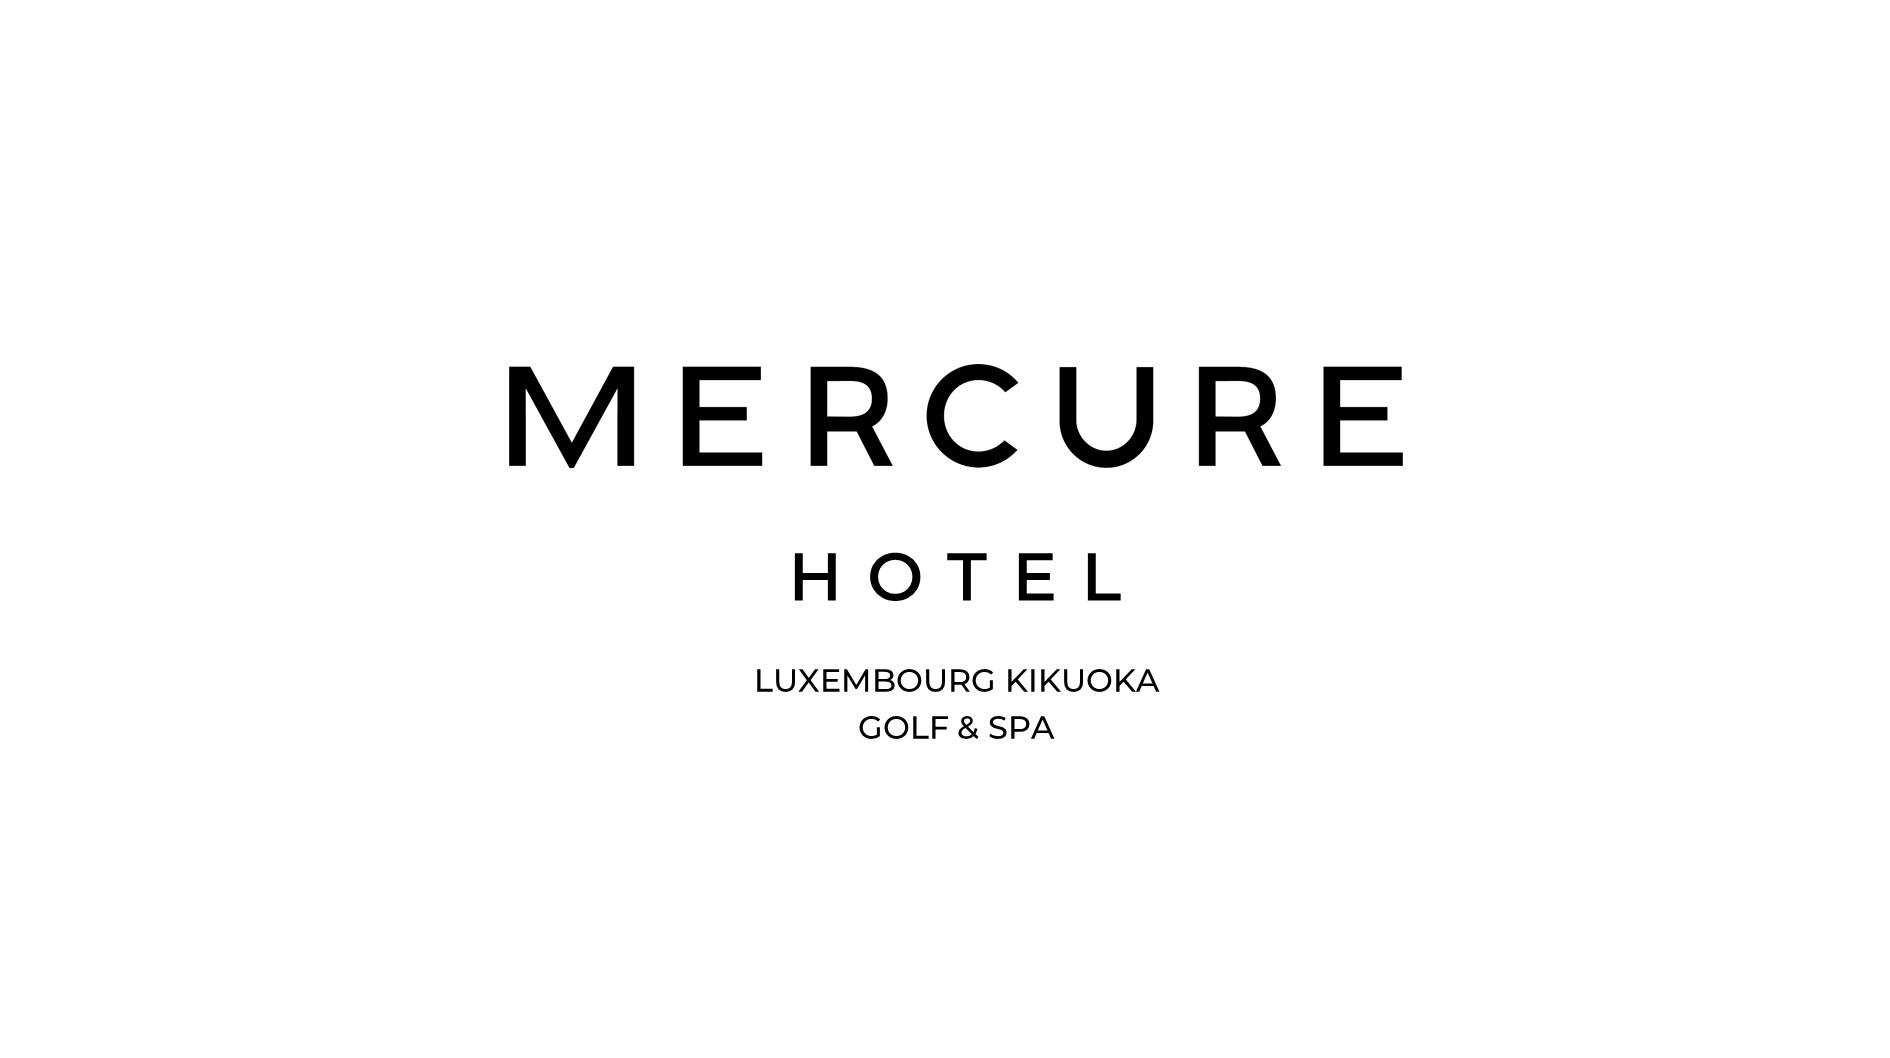 Mercure luxembourg kikuoka